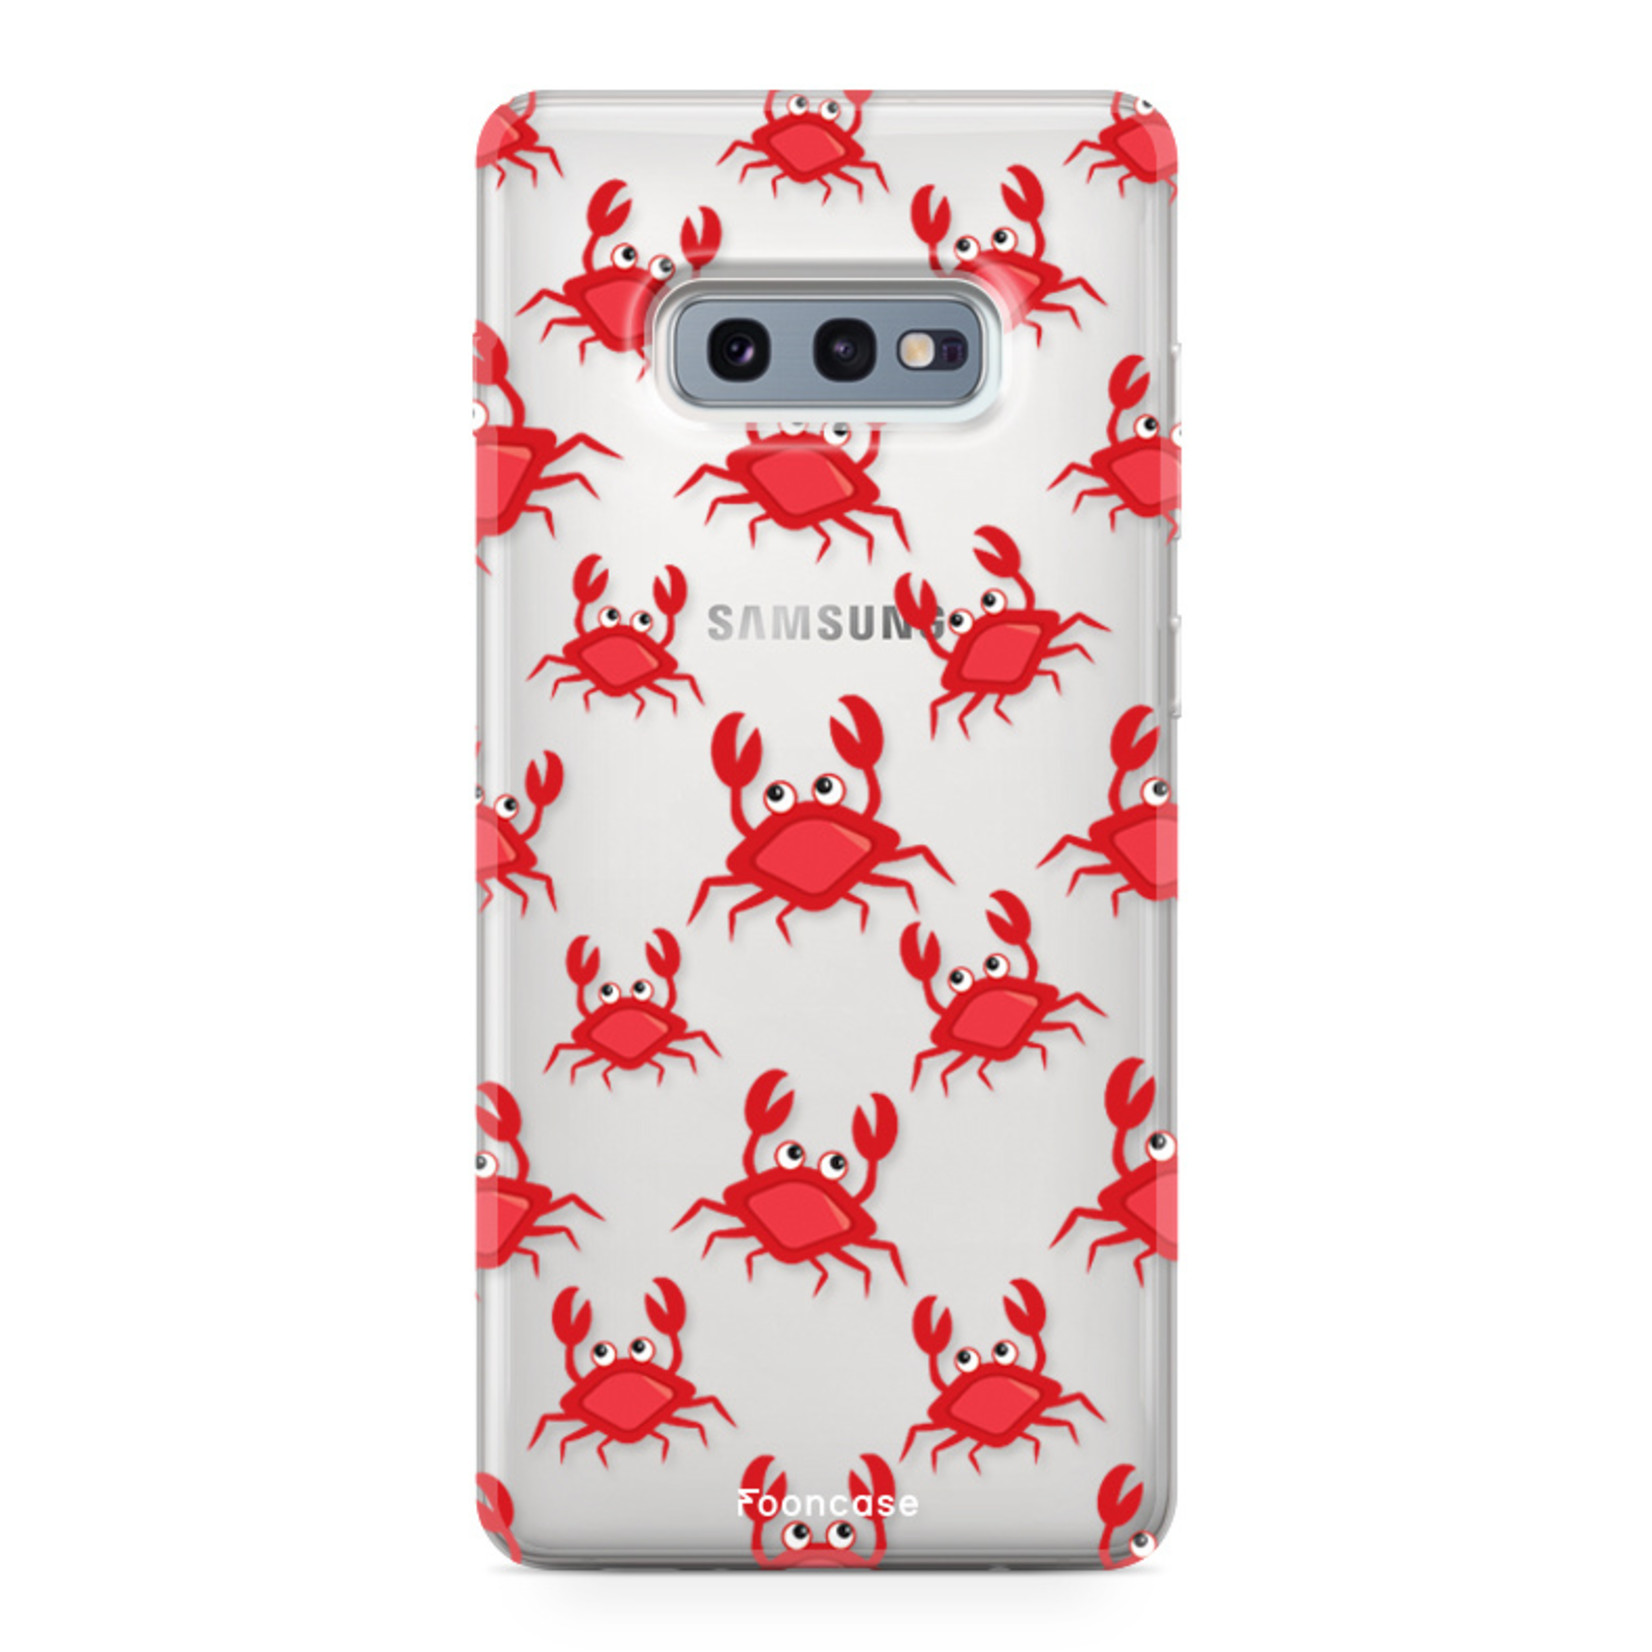 FOONCASE Samsung Galaxy S10e Handyhülle - Krabben